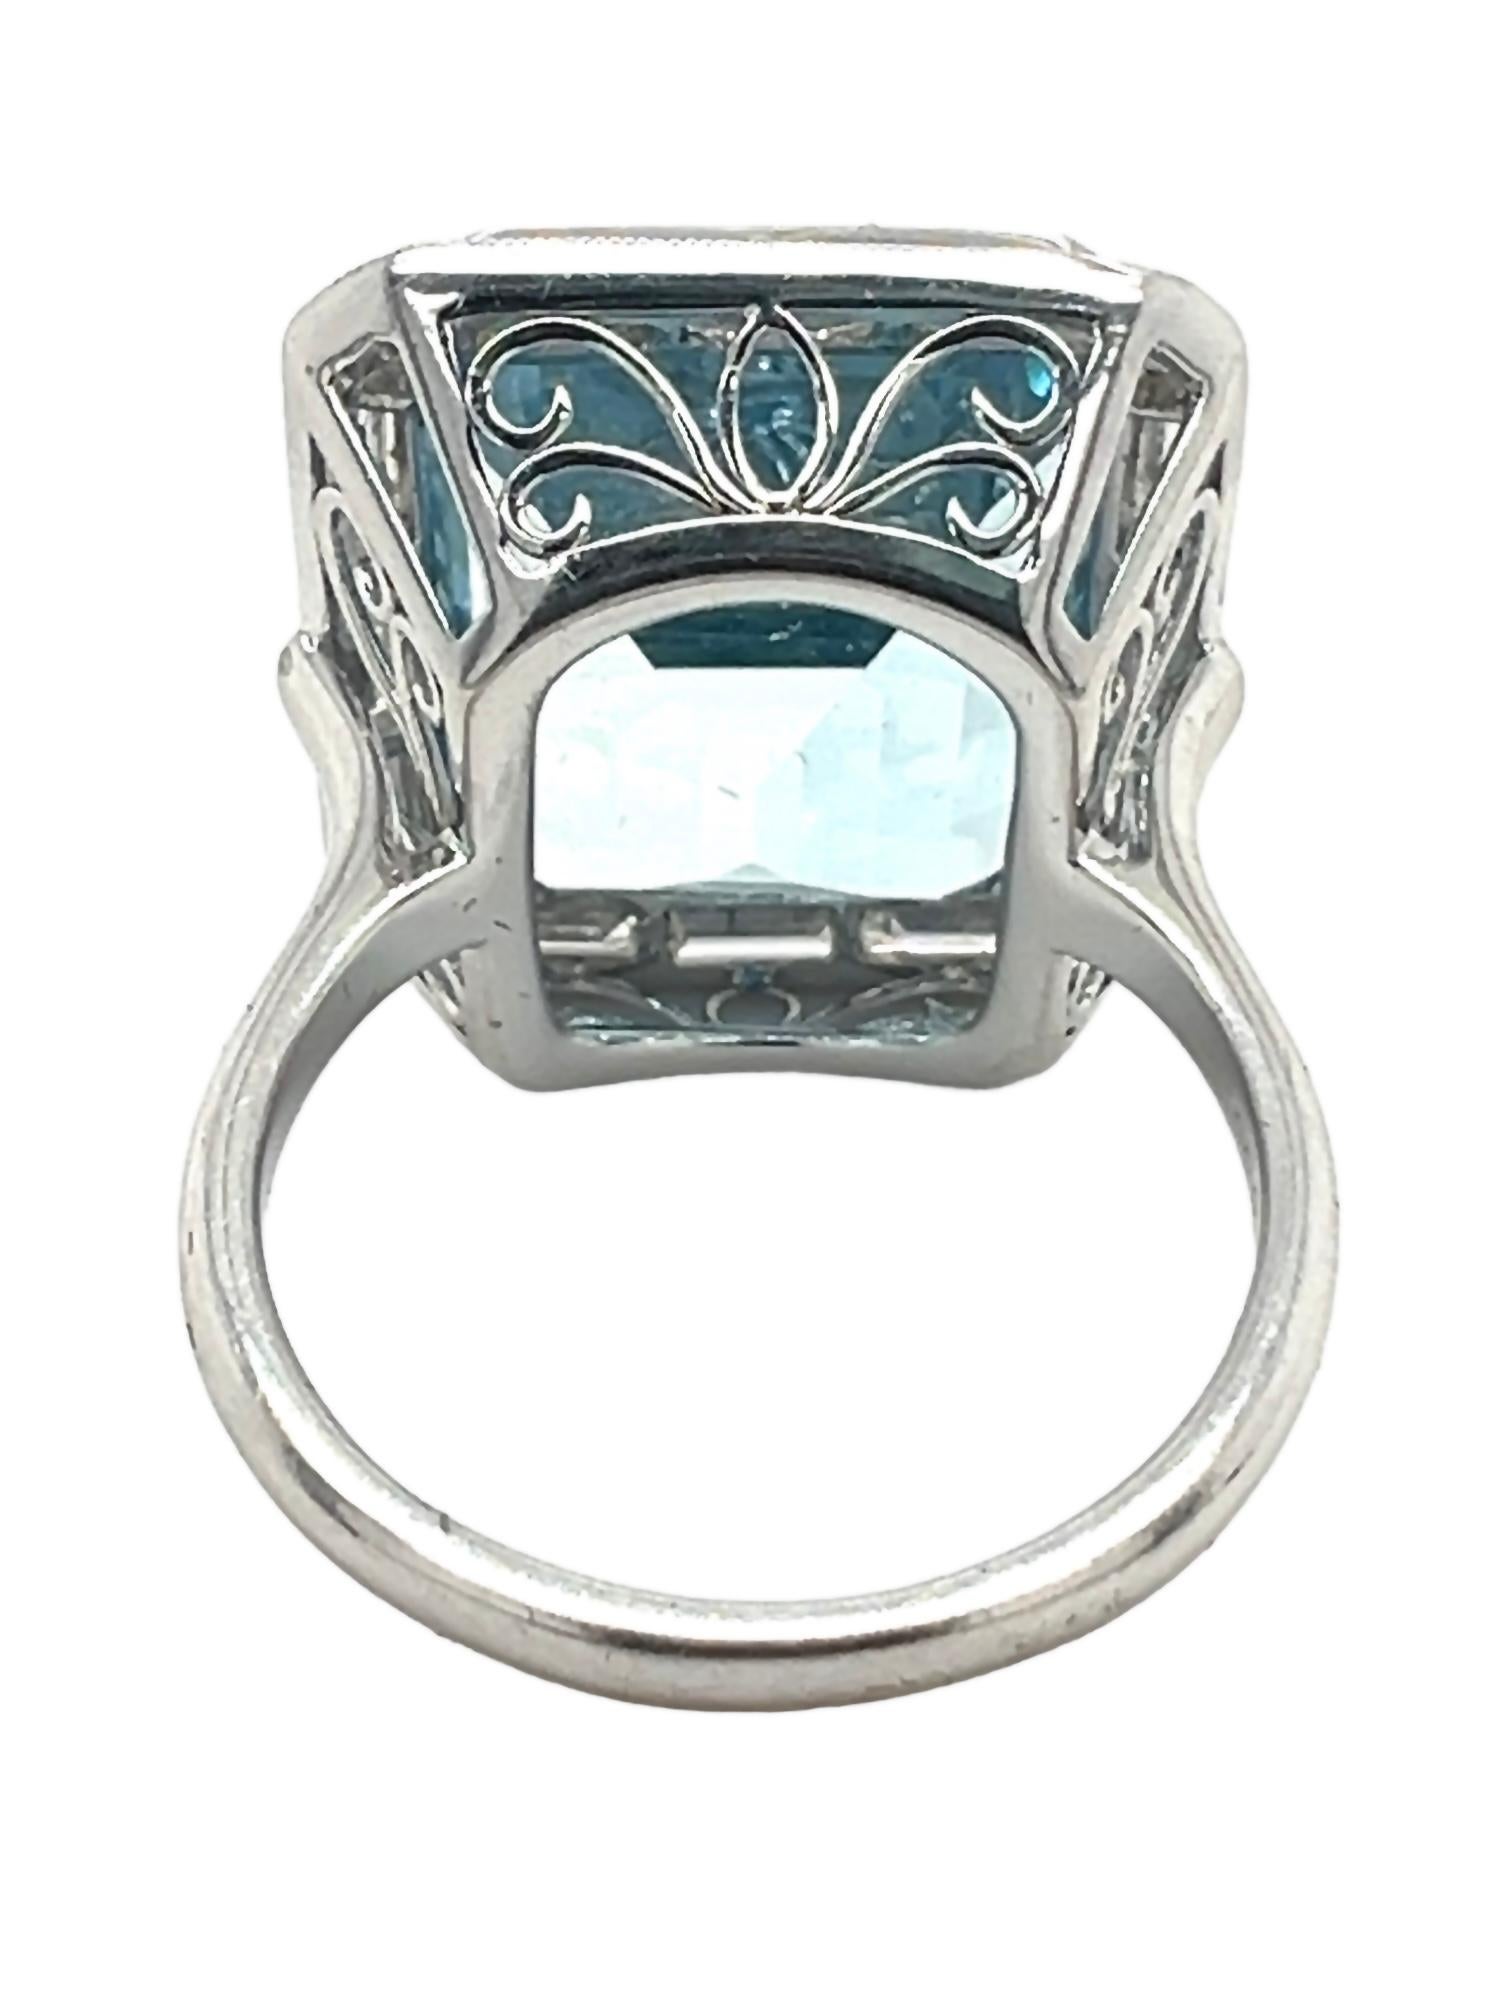 Emerald Cut Sophia D. 16.25 Carat Aquamarine Ring